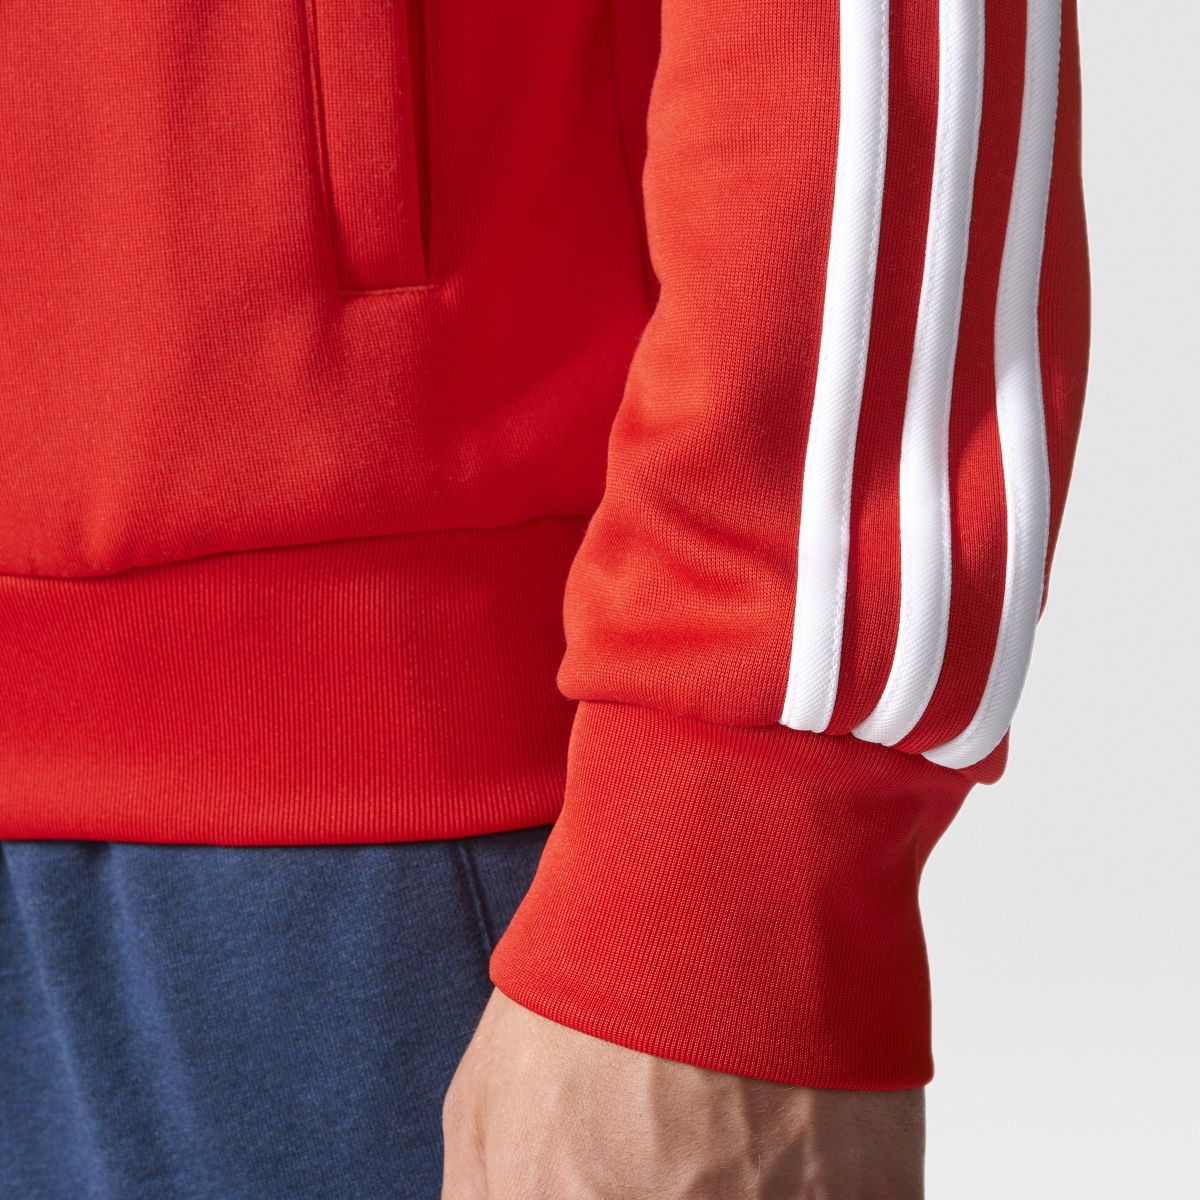 Adidas Originals Superstar Men's Track Jacket Vivid Red/White ay7062 - image 5 of 5